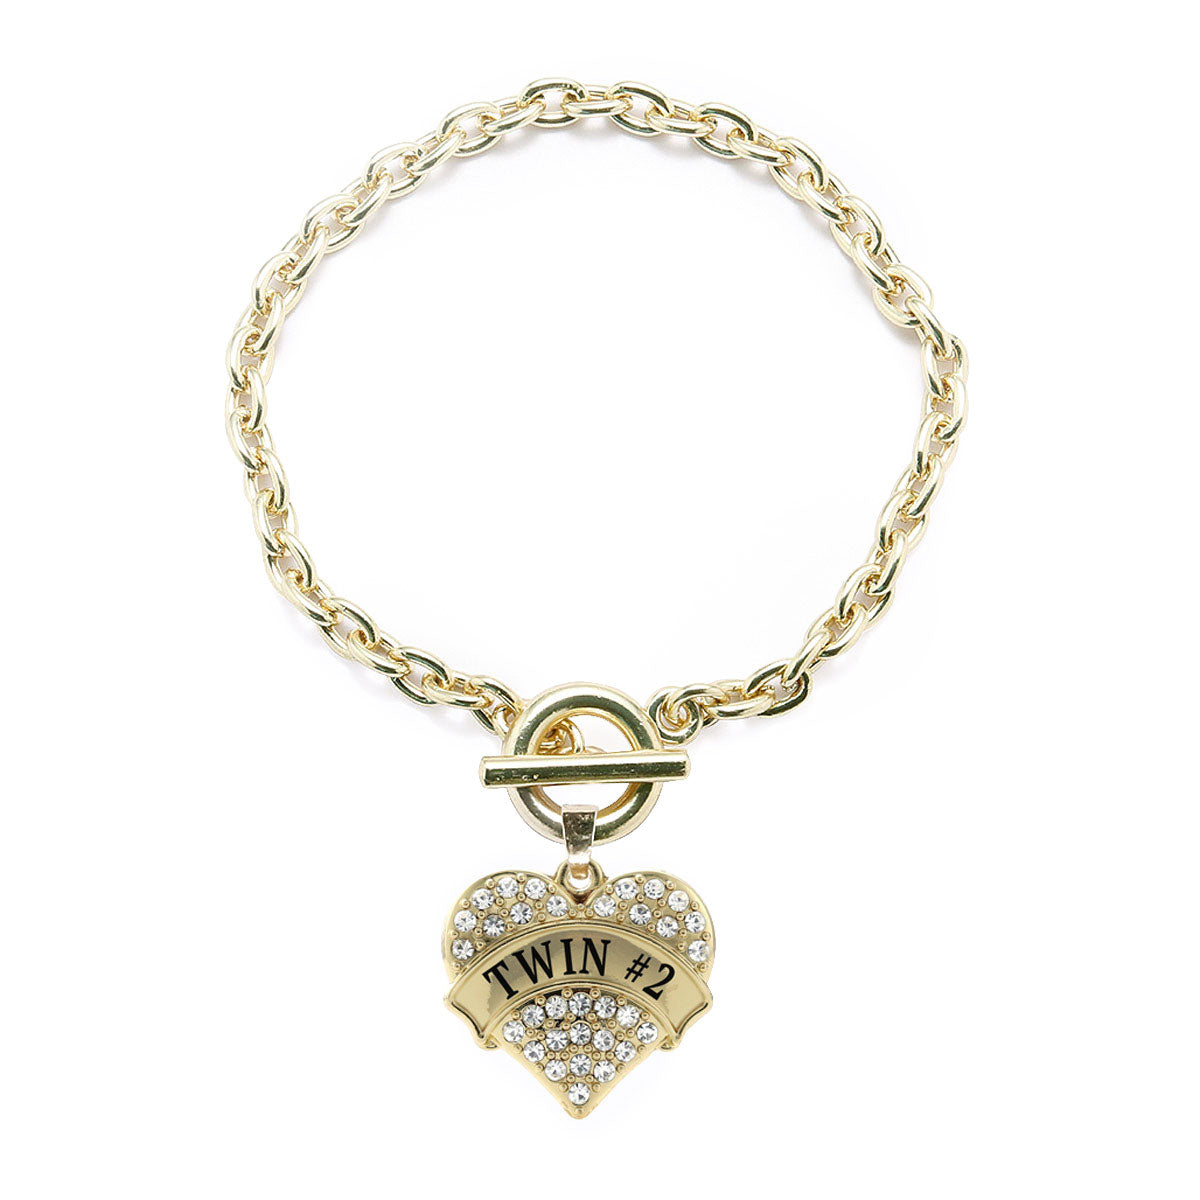 Gold Twin #2 Pave Heart Charm Toggle Bracelet